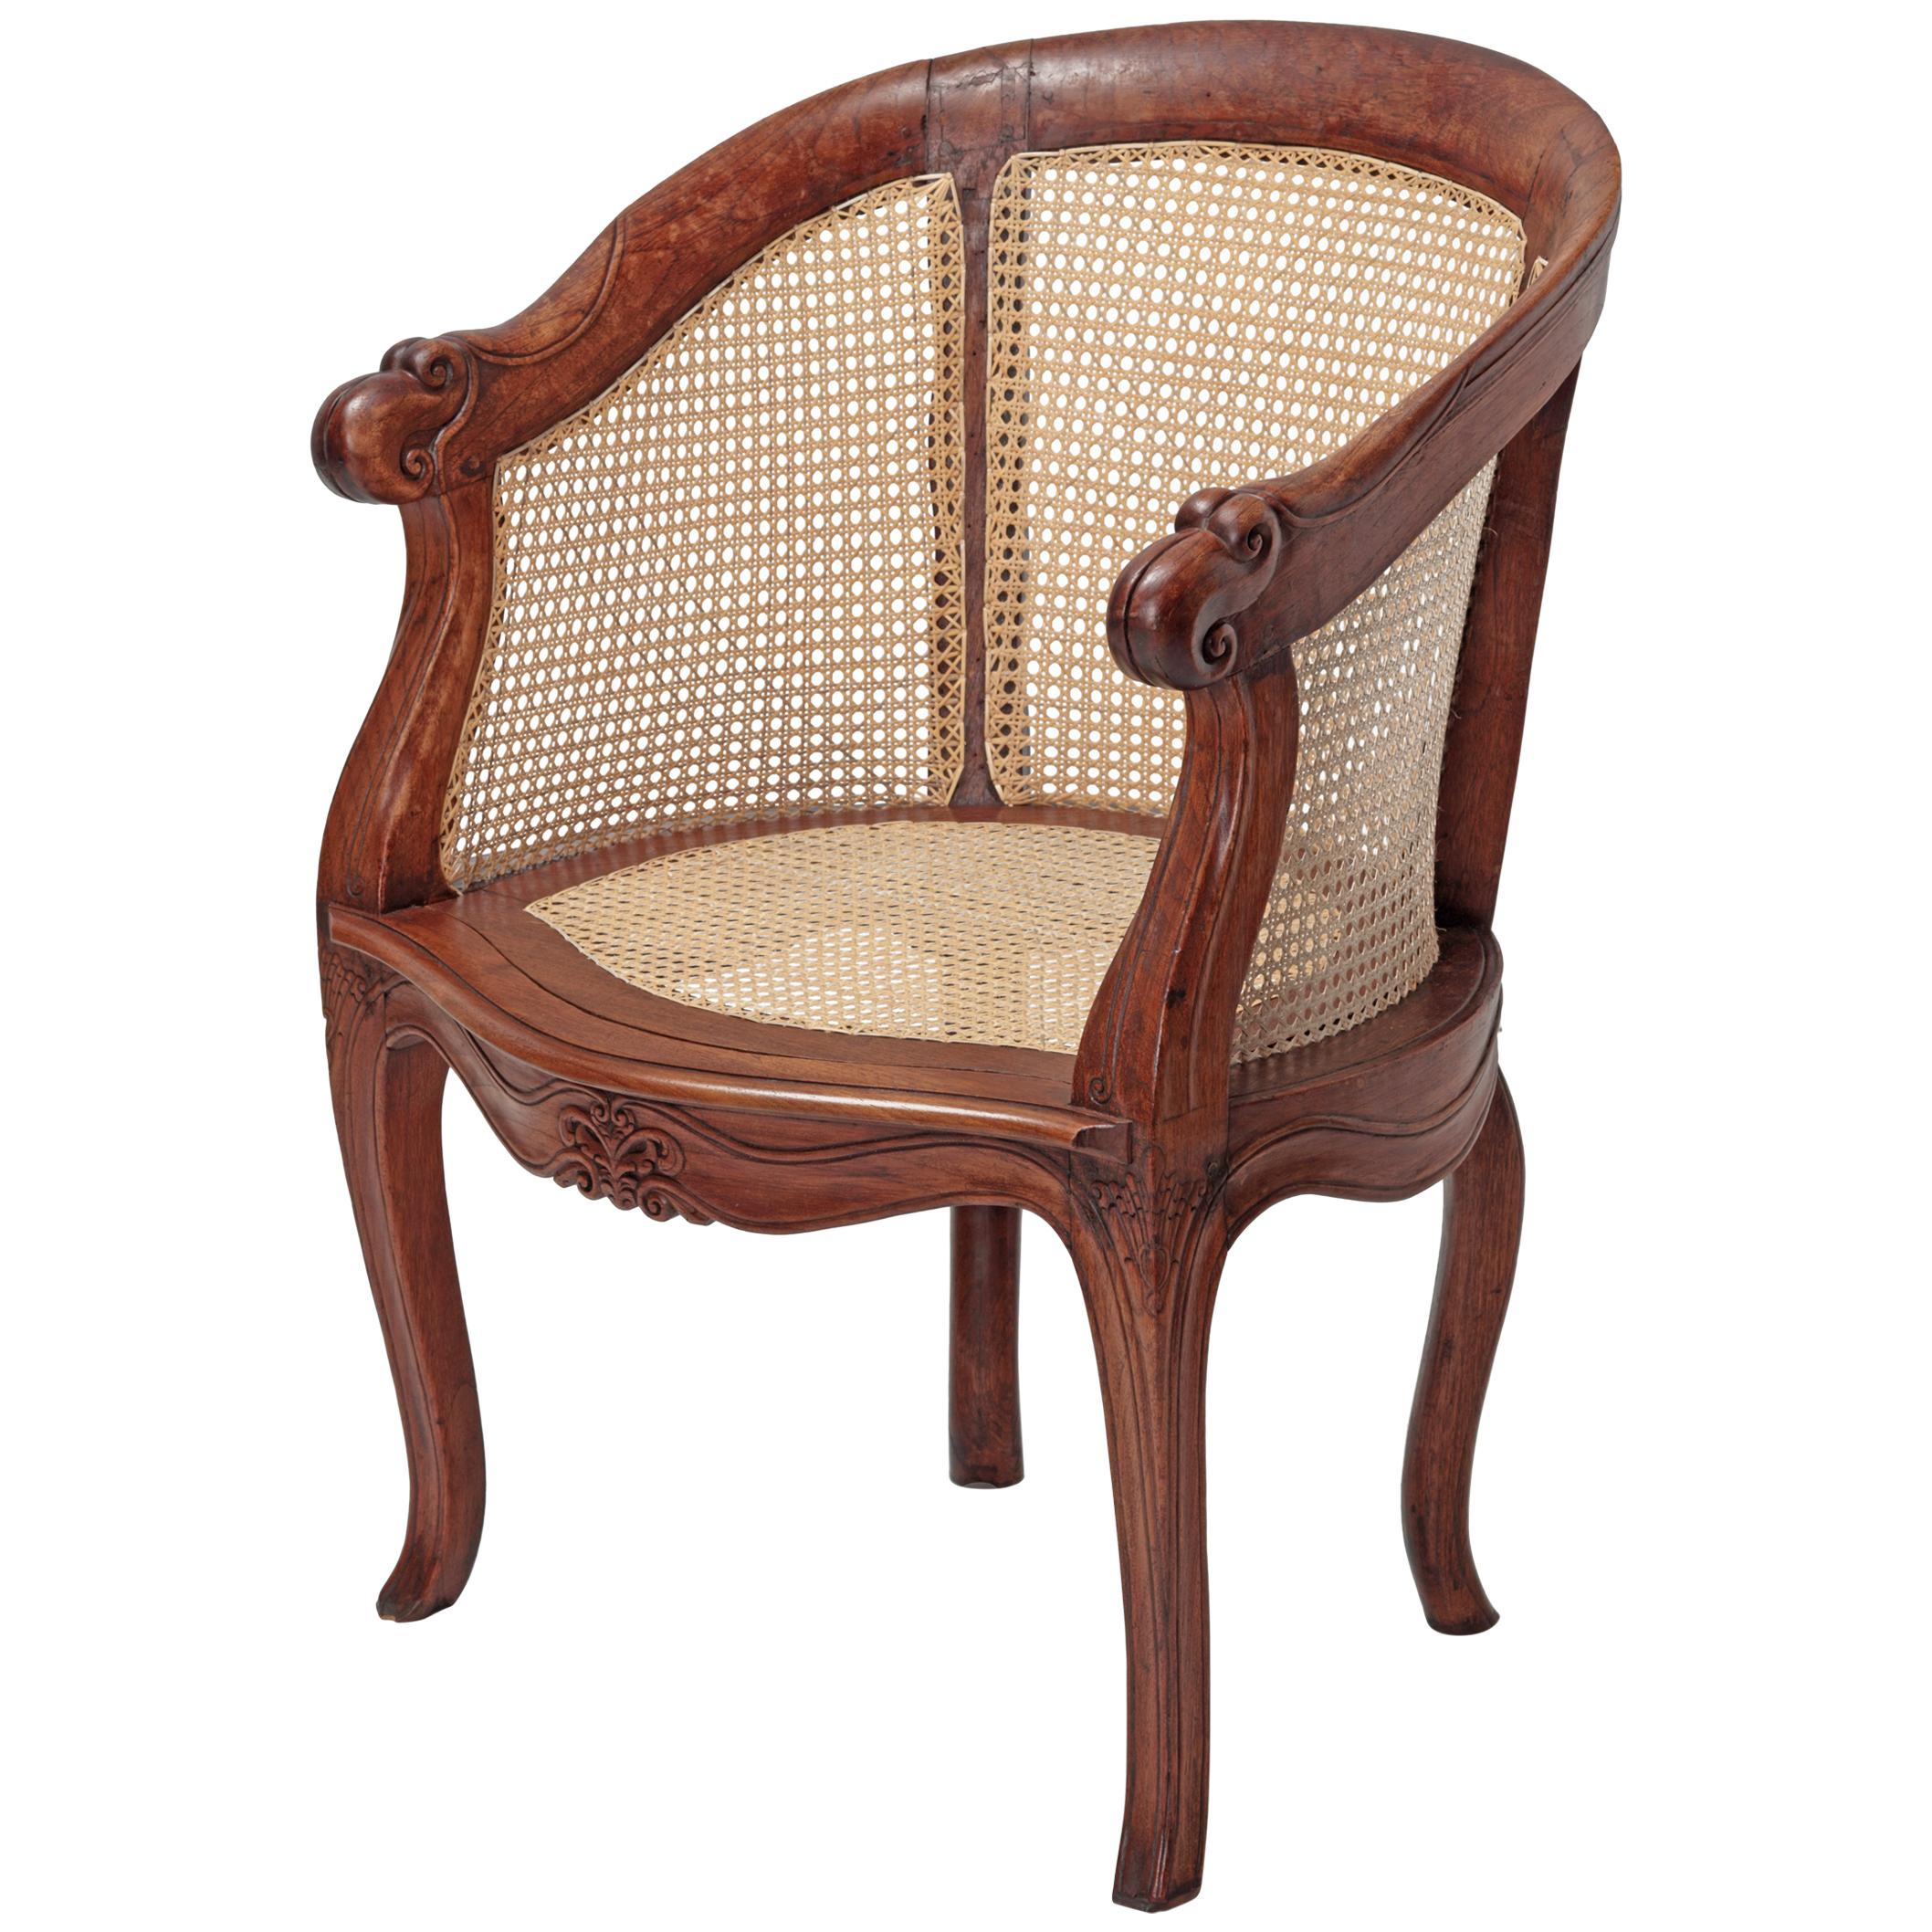 Dutch Colonial Teak Round Back Chair, Late 18th Century